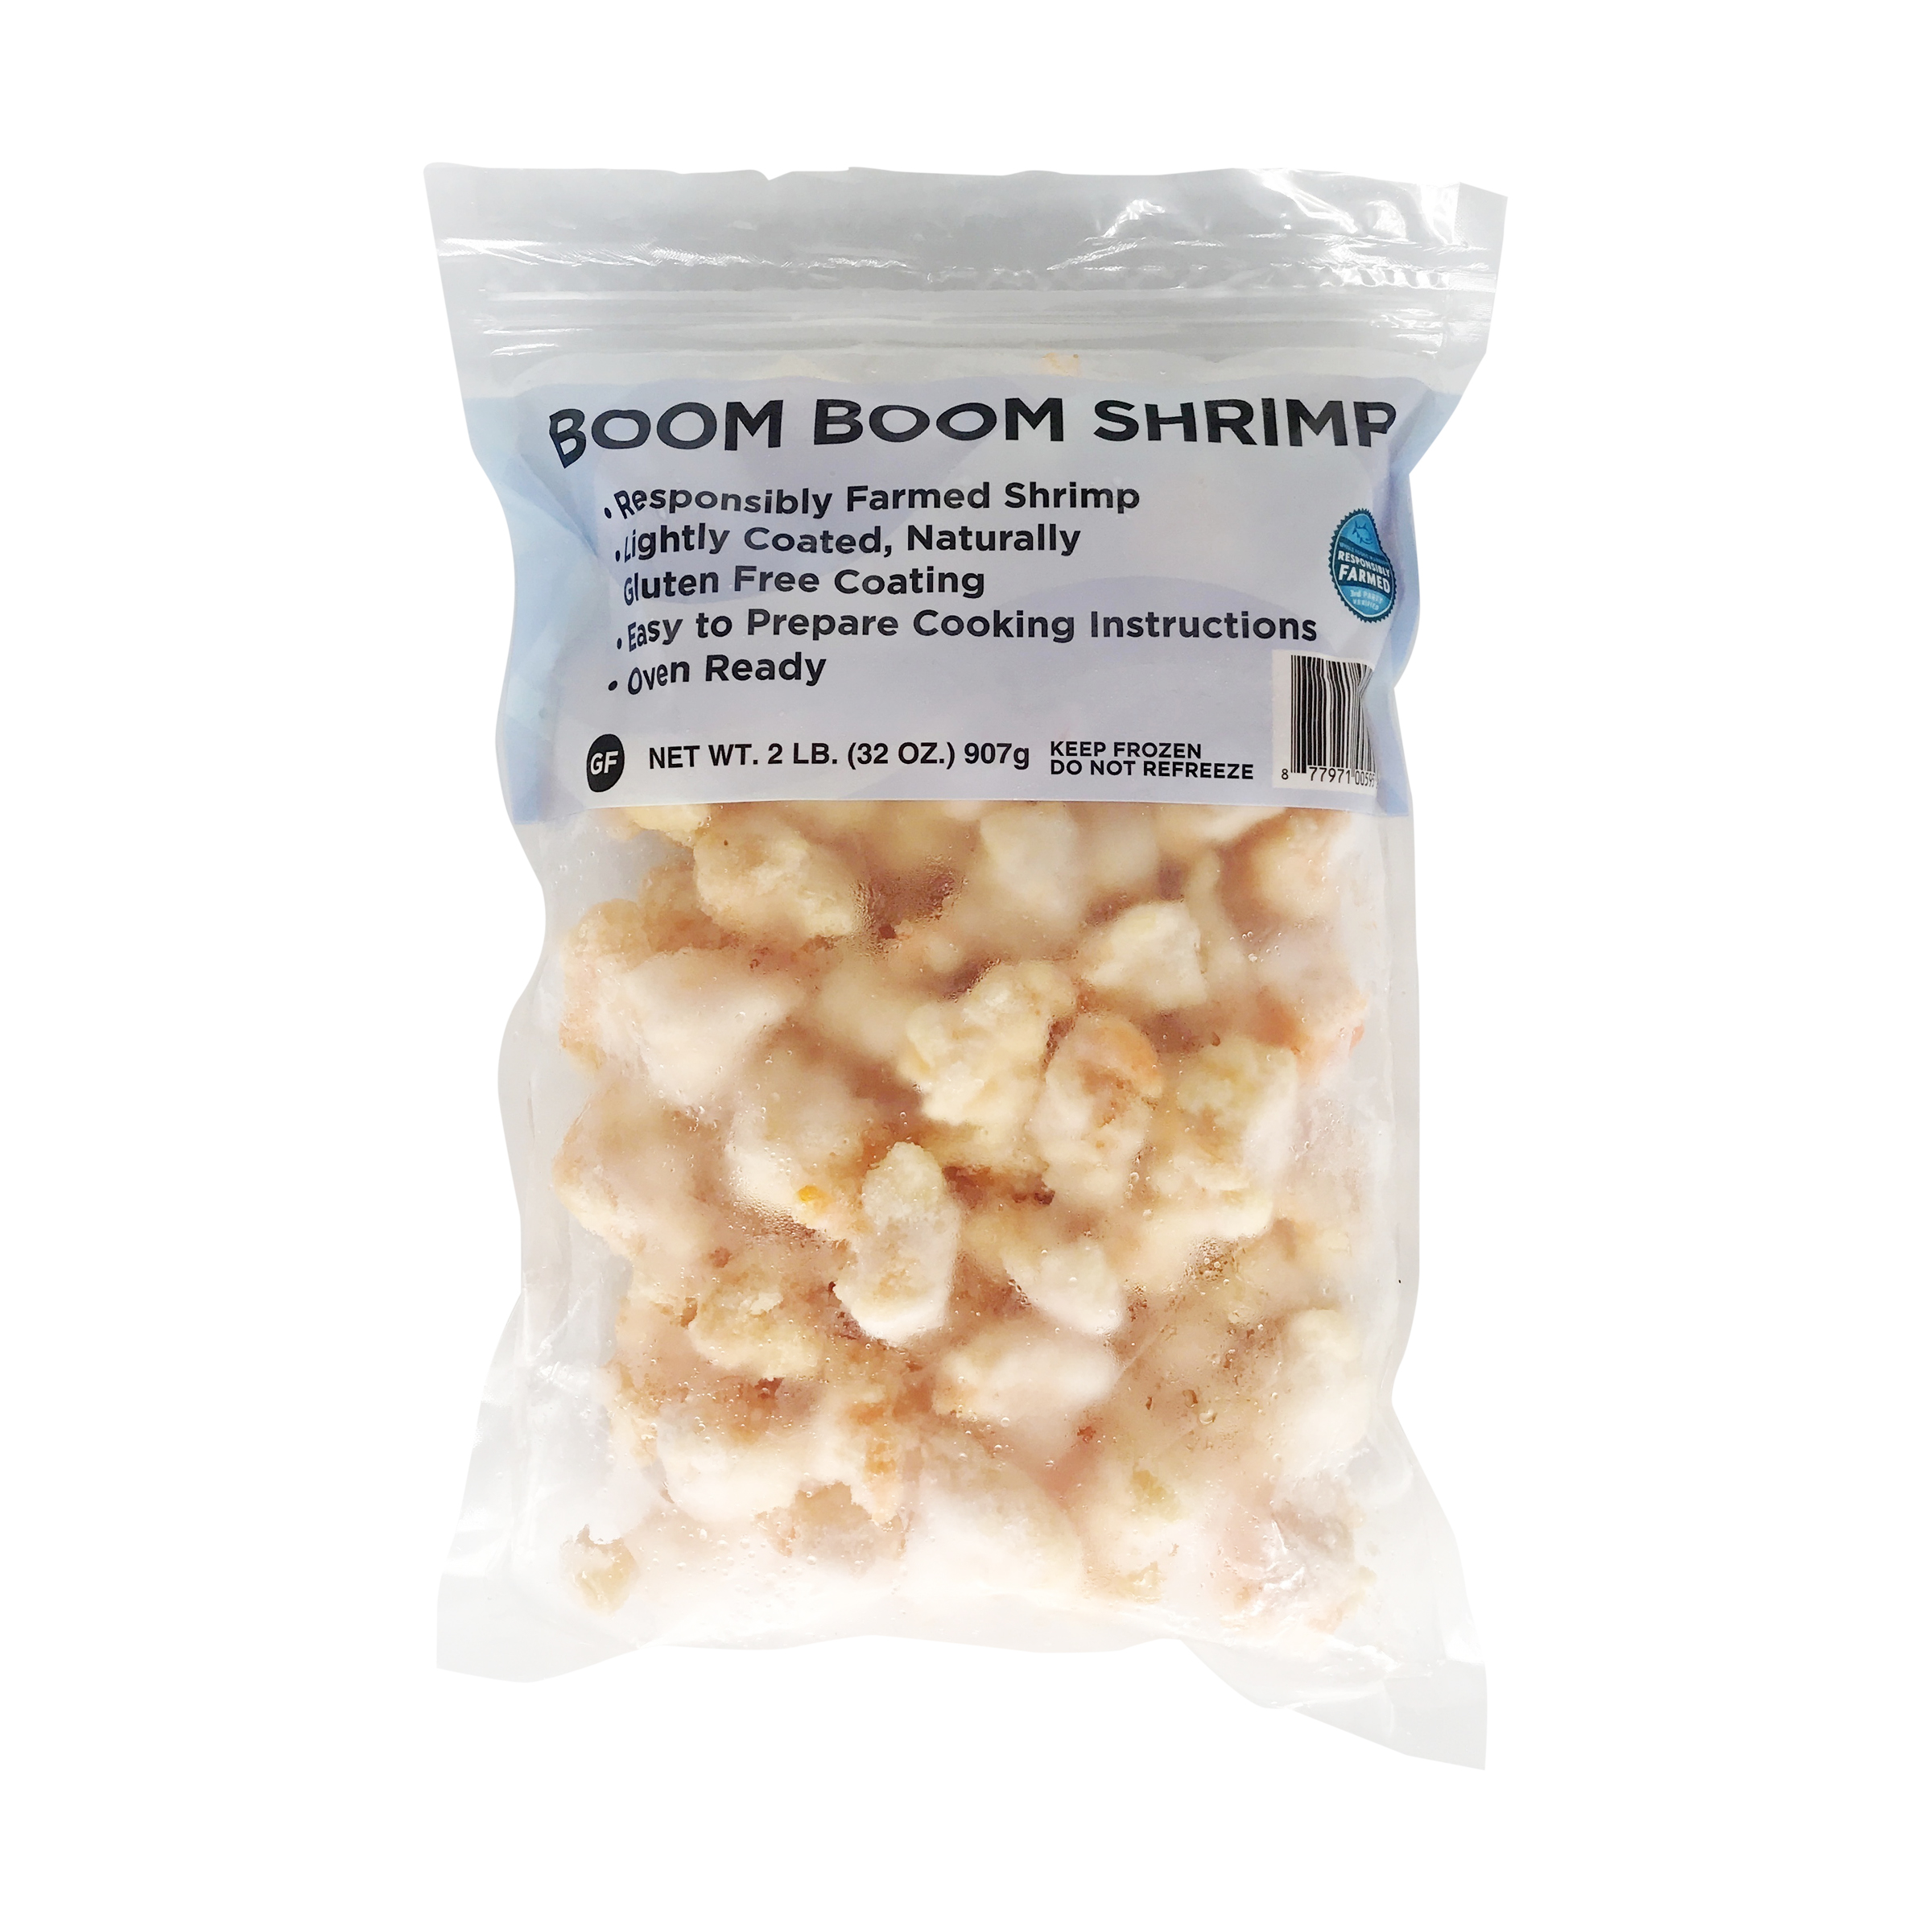 Image result for boom boom shrimp whole foods